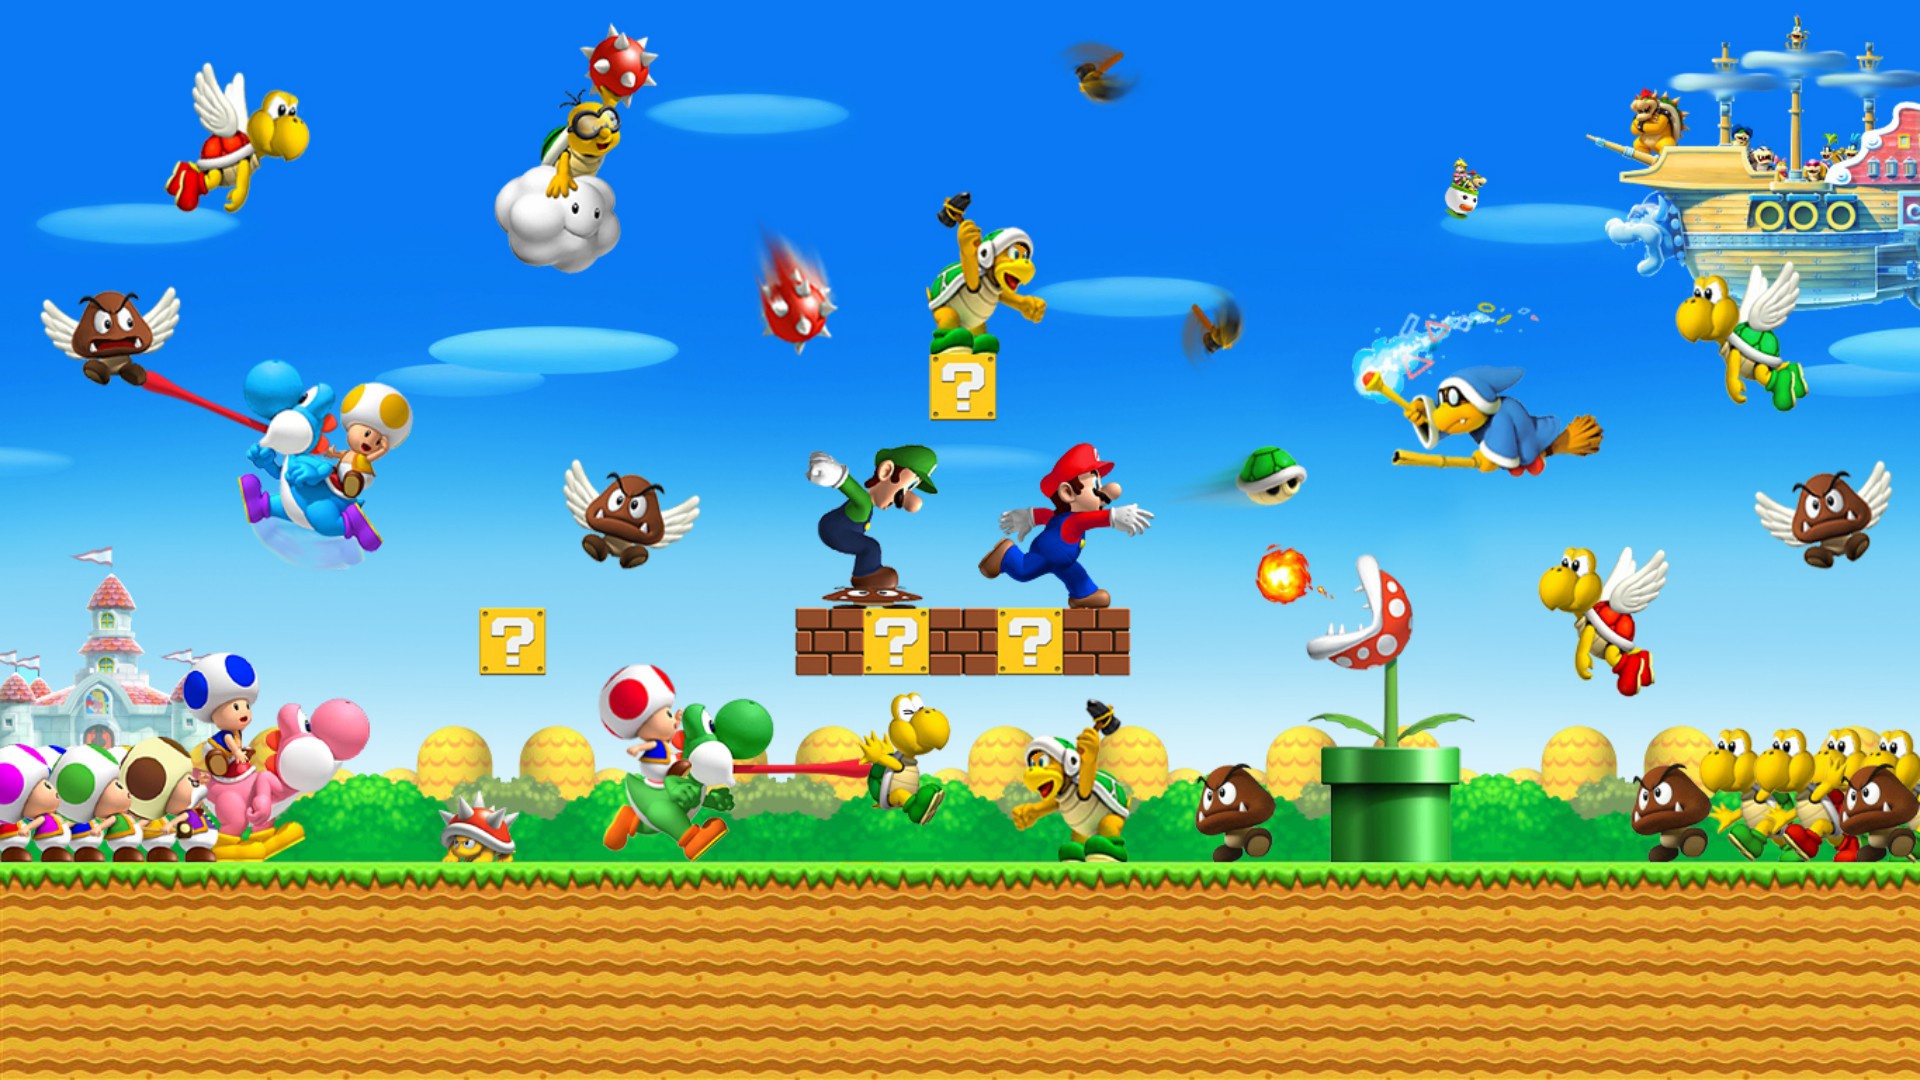 Download Desktop Wii Wallpapers Of Super Mario Galaxy 2